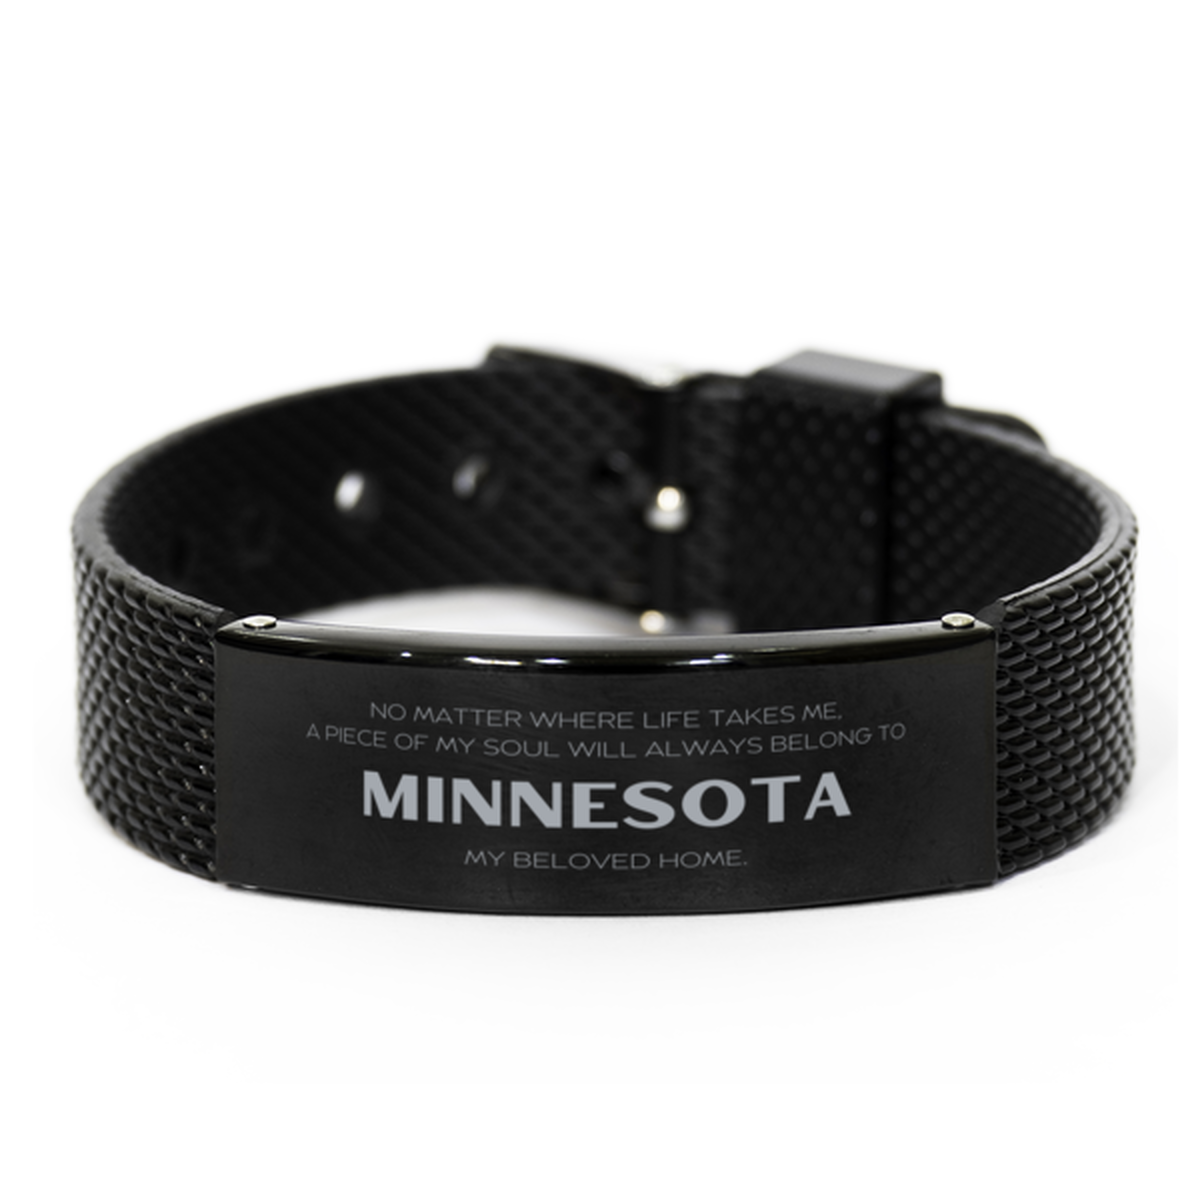 Love Minnesota State Gifts, My soul will always belong to Minnesota, Proud Black Shark Mesh Bracelet, Birthday Unique Gifts For Minnesota Men, Women, Friends